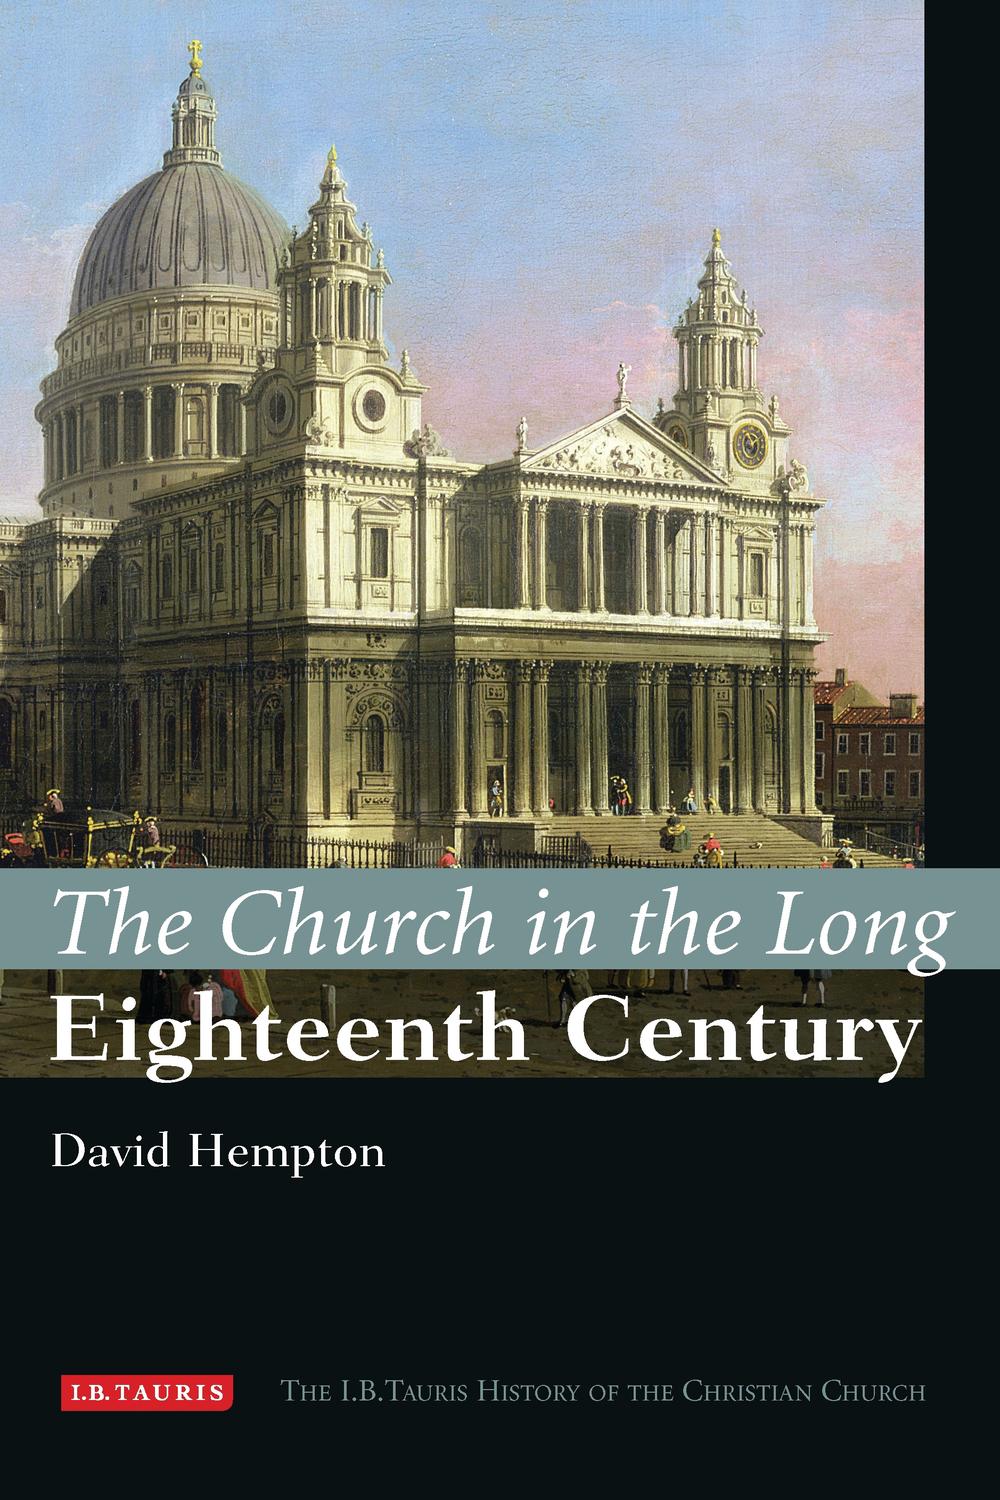 The Church in the Long Eighteenth Century - David Hempton